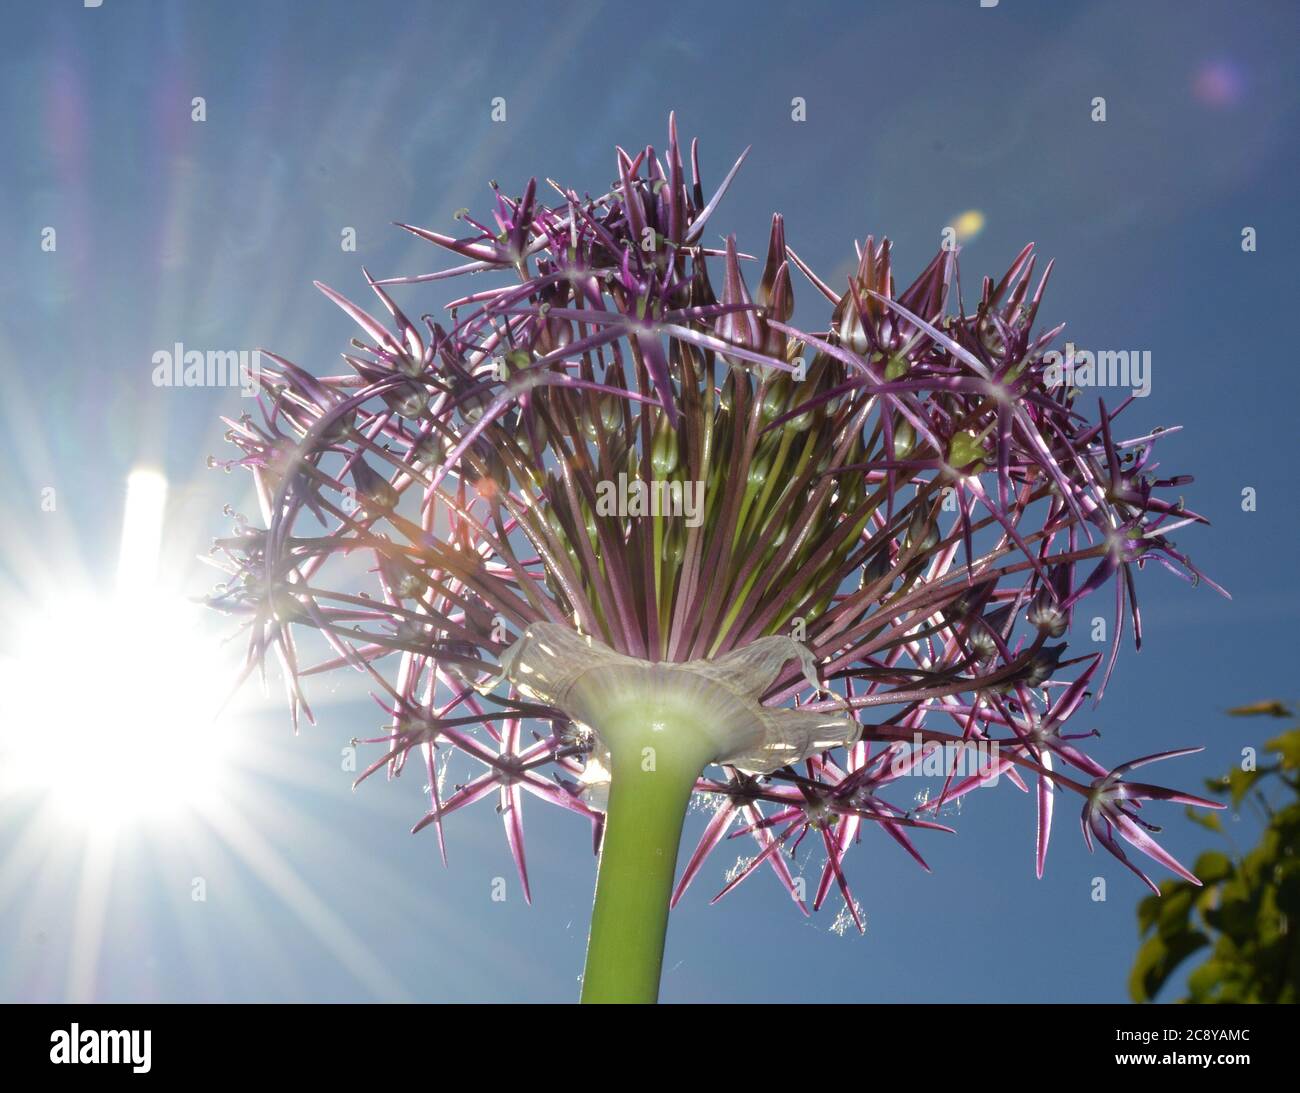 Alium flower with sun flare Stock Photo